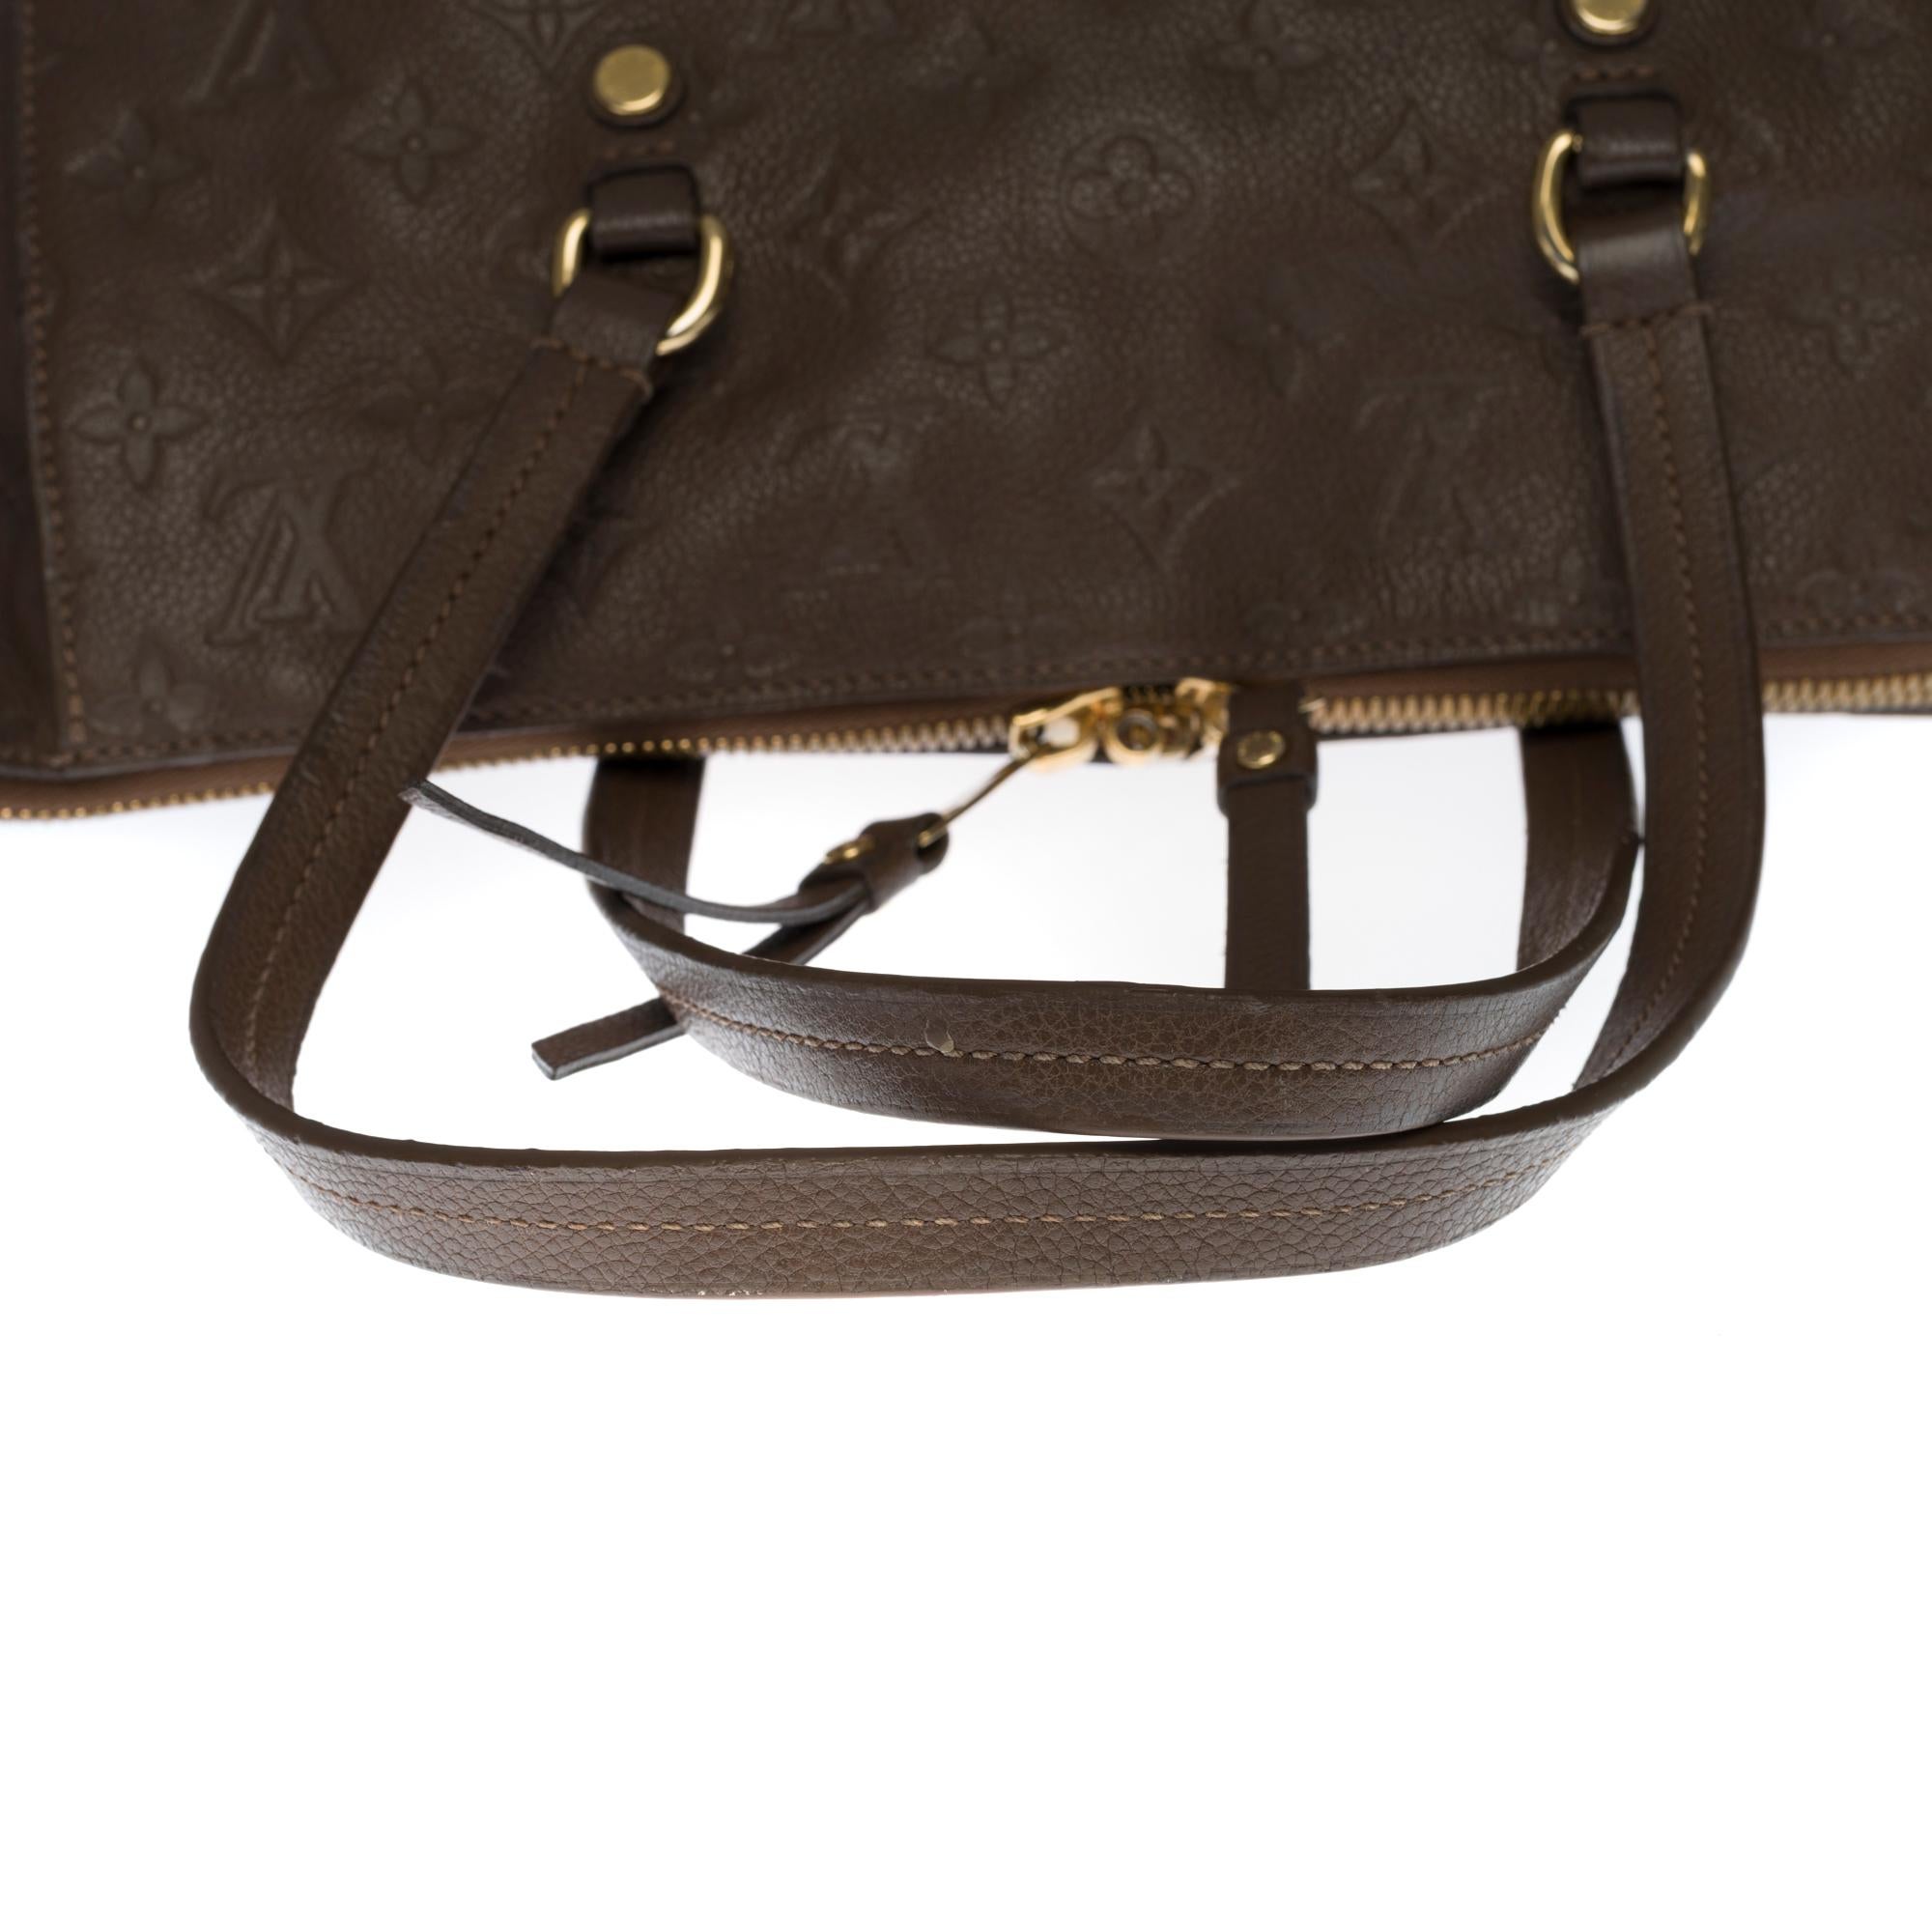 Louis Vuitton Lumineuse Shoulder bag in brown empreinte leather, GHW 2